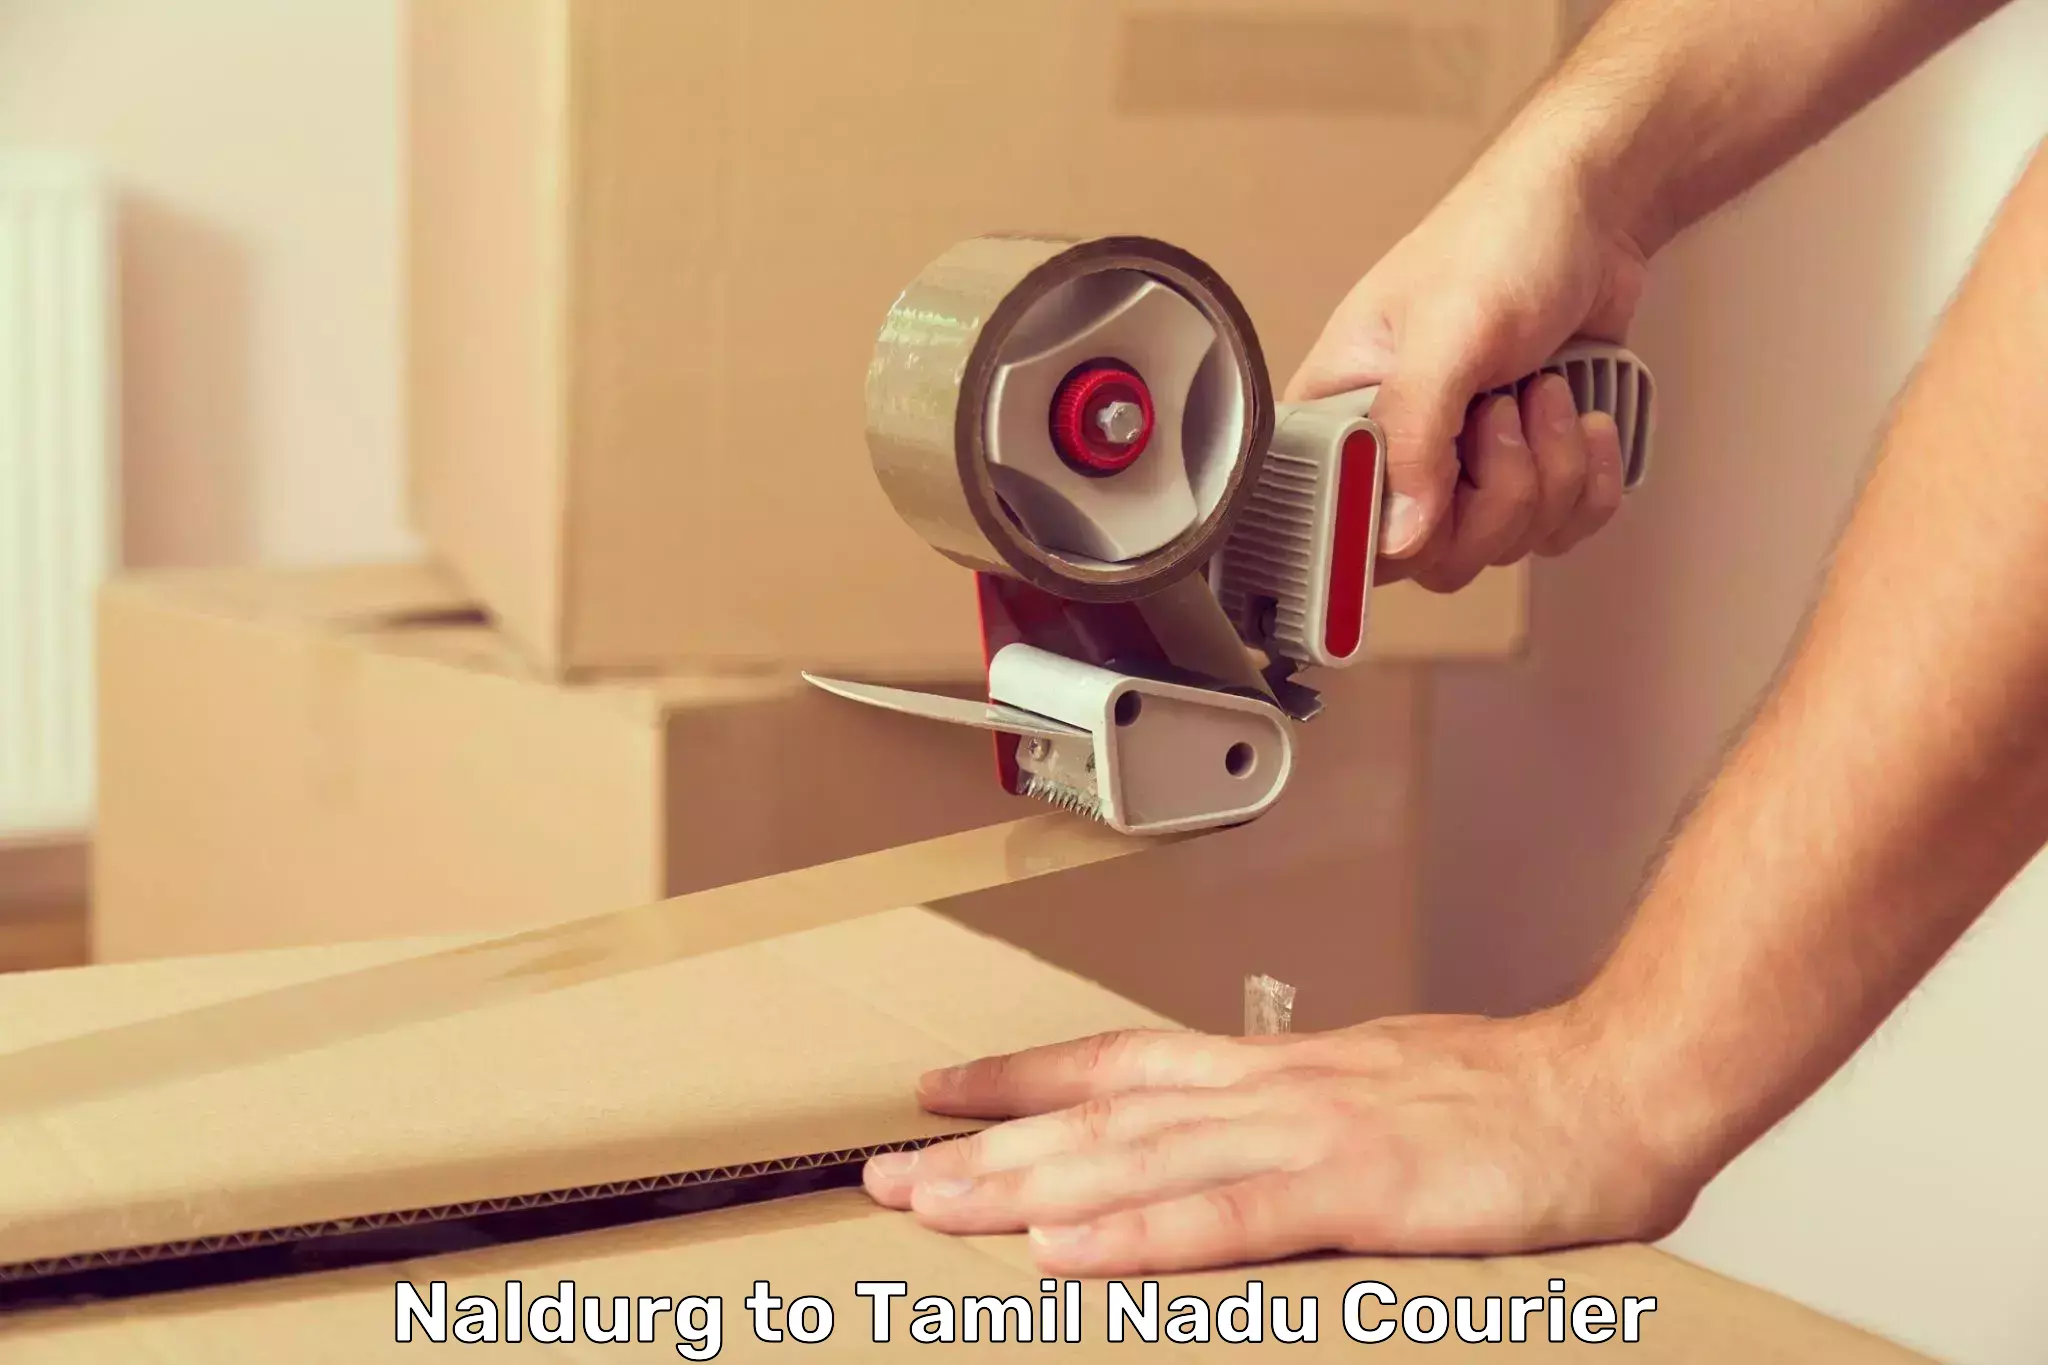 Online courier booking Naldurg to Ooty